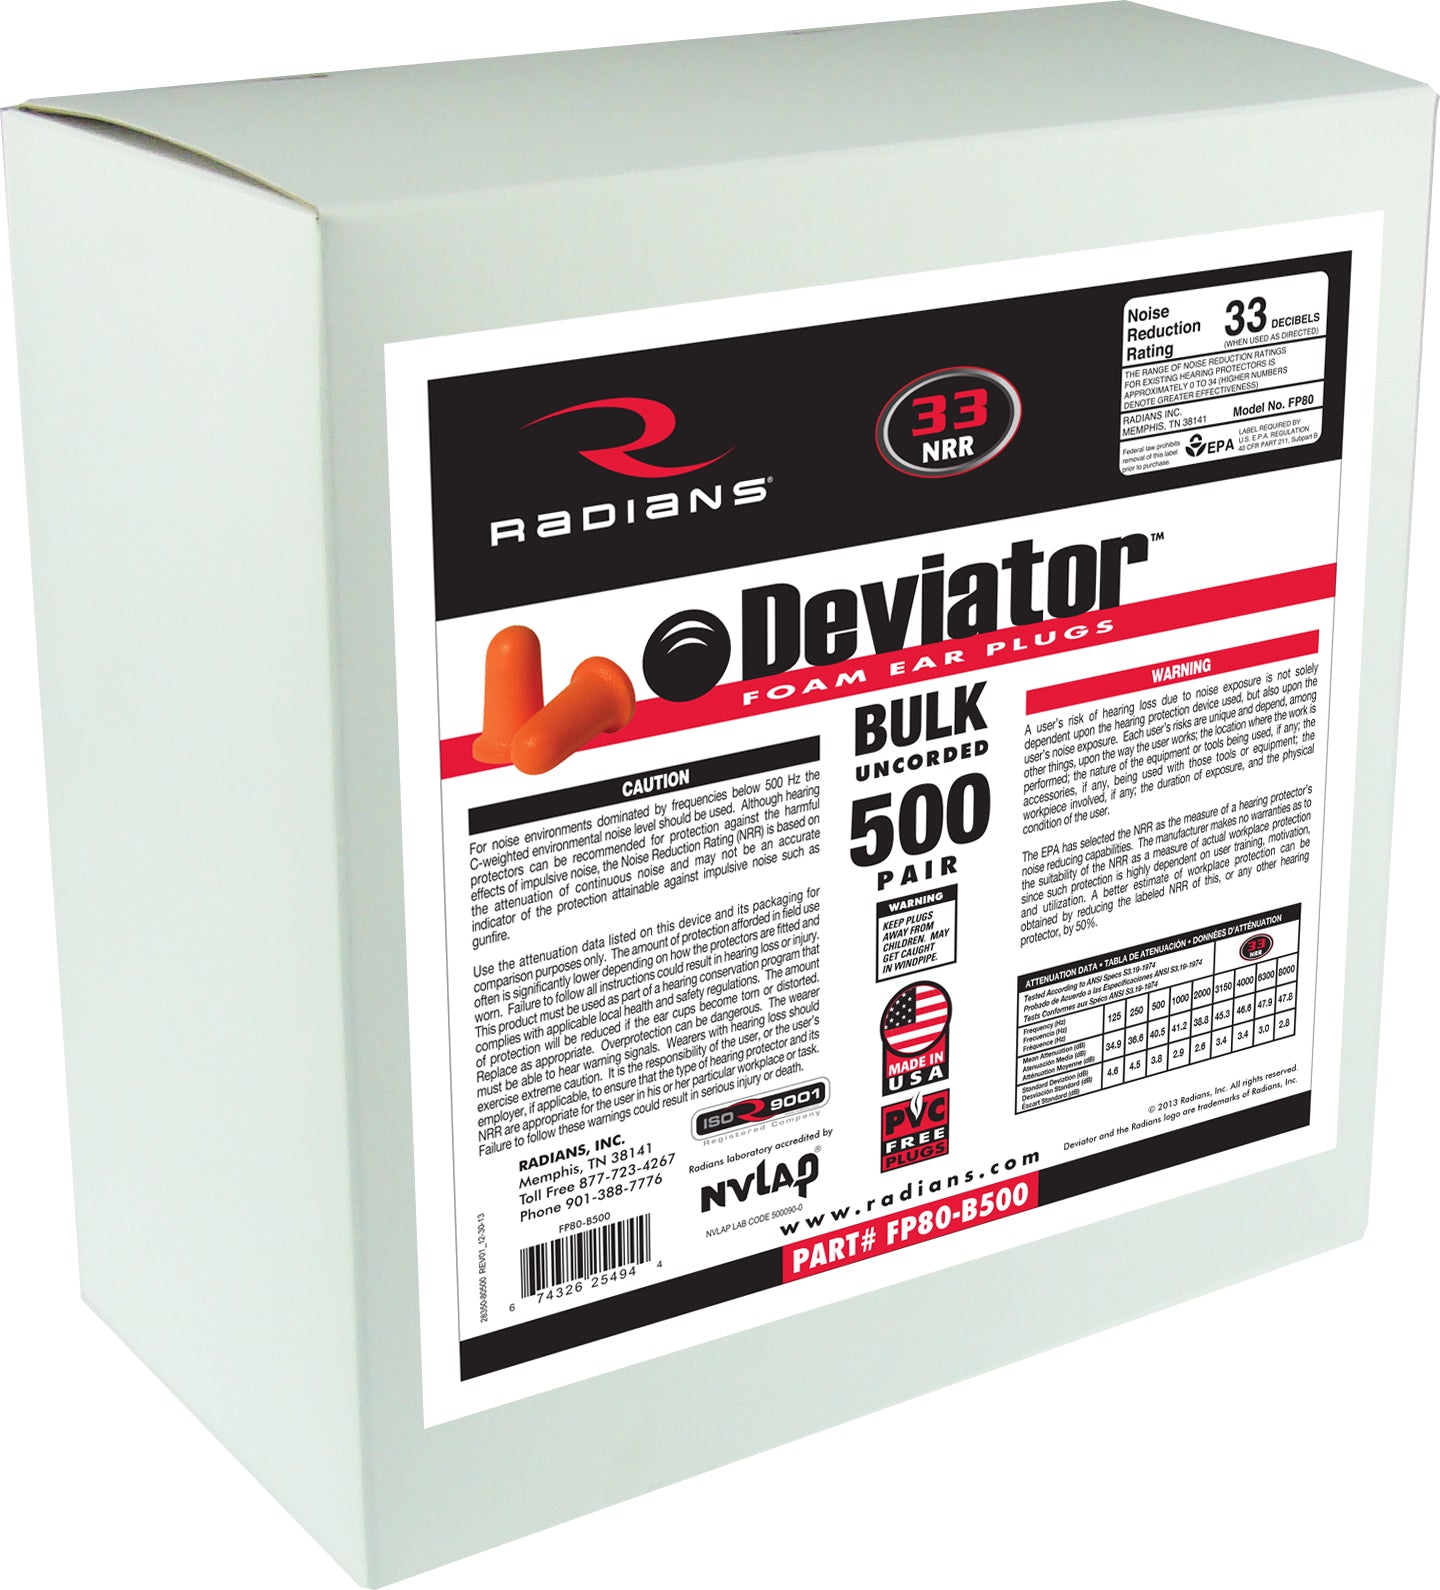 Radians Deviator® Foam Uncorded Earplug Dispenser Refill - 500 Pair-eSafety Supplies, Inc